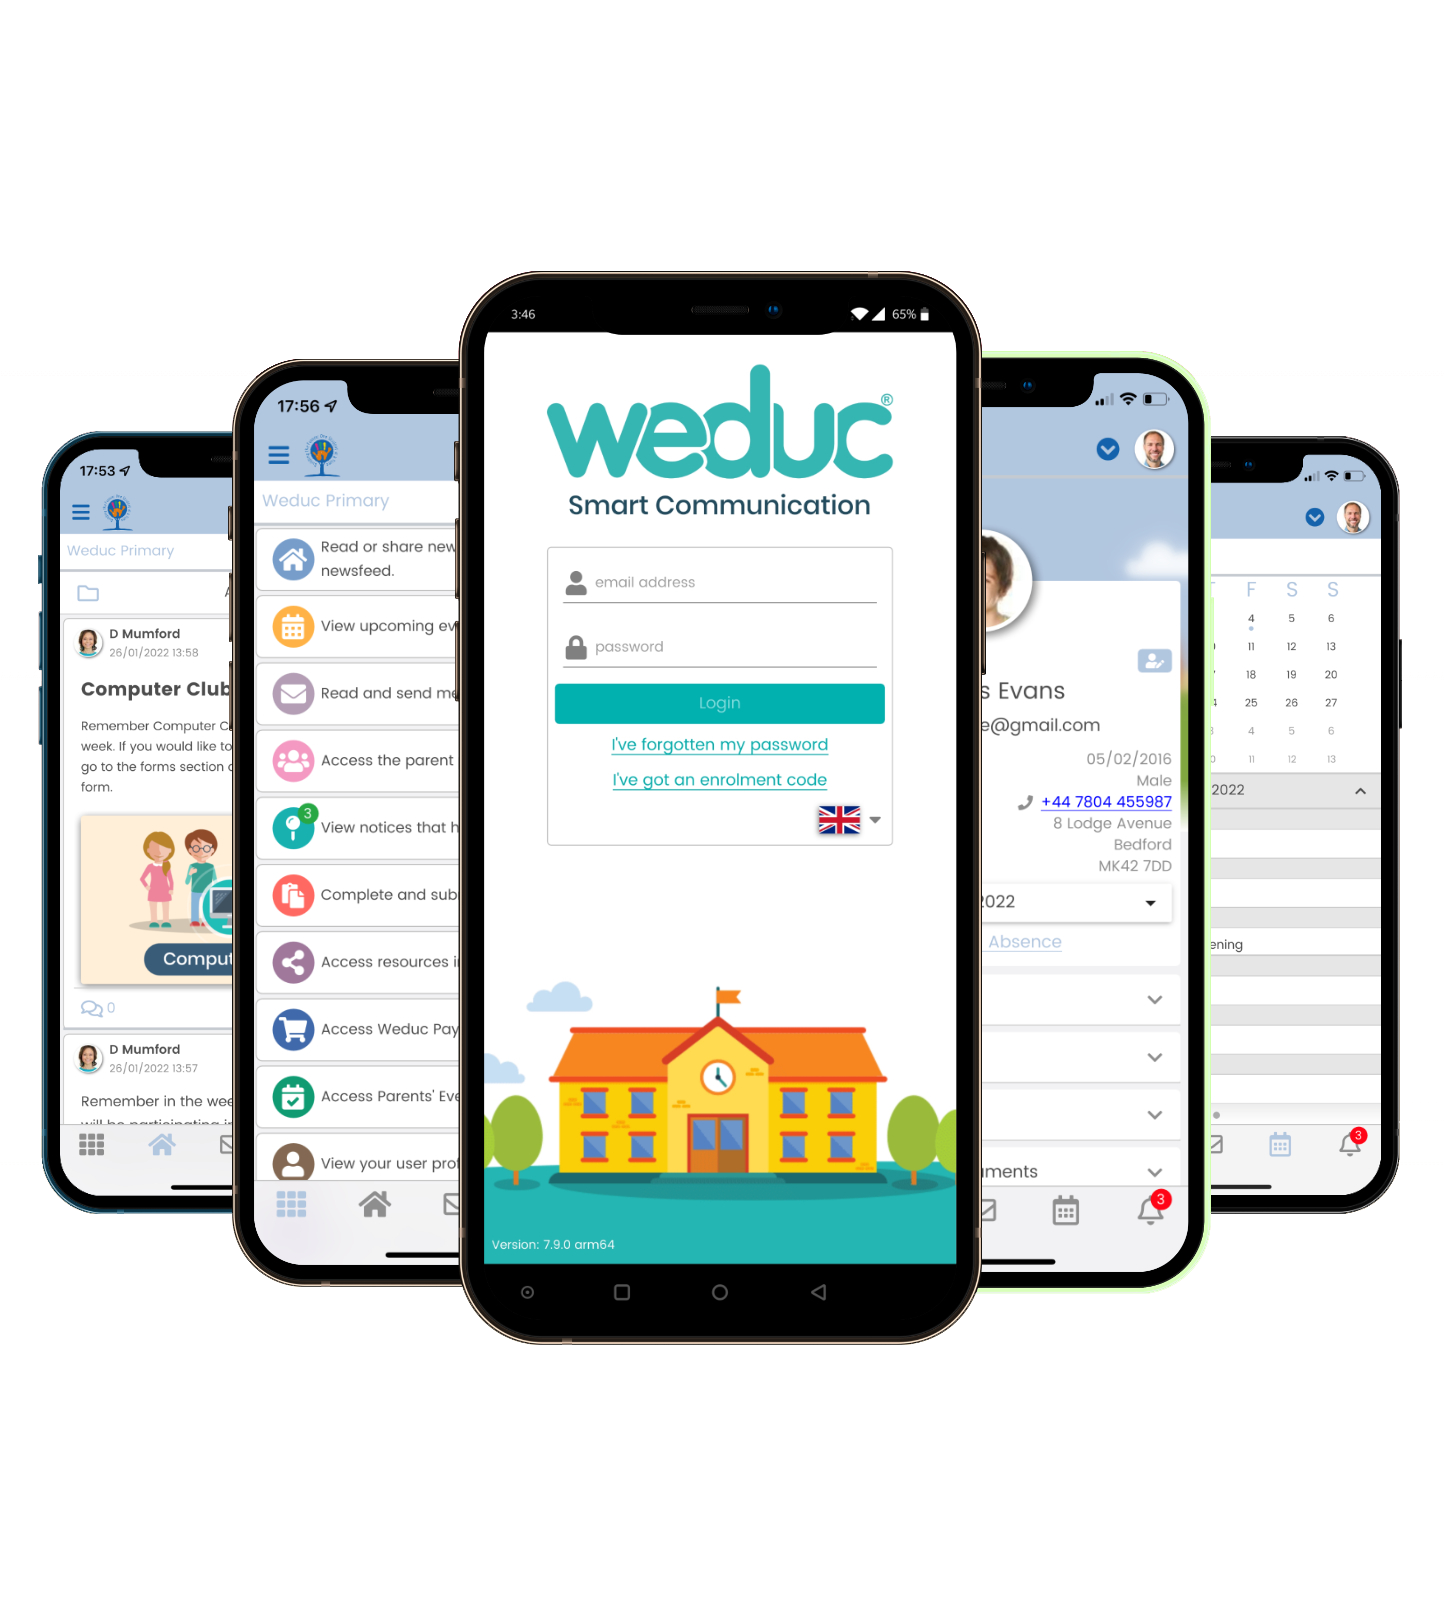 weduc app on 5 screens v4